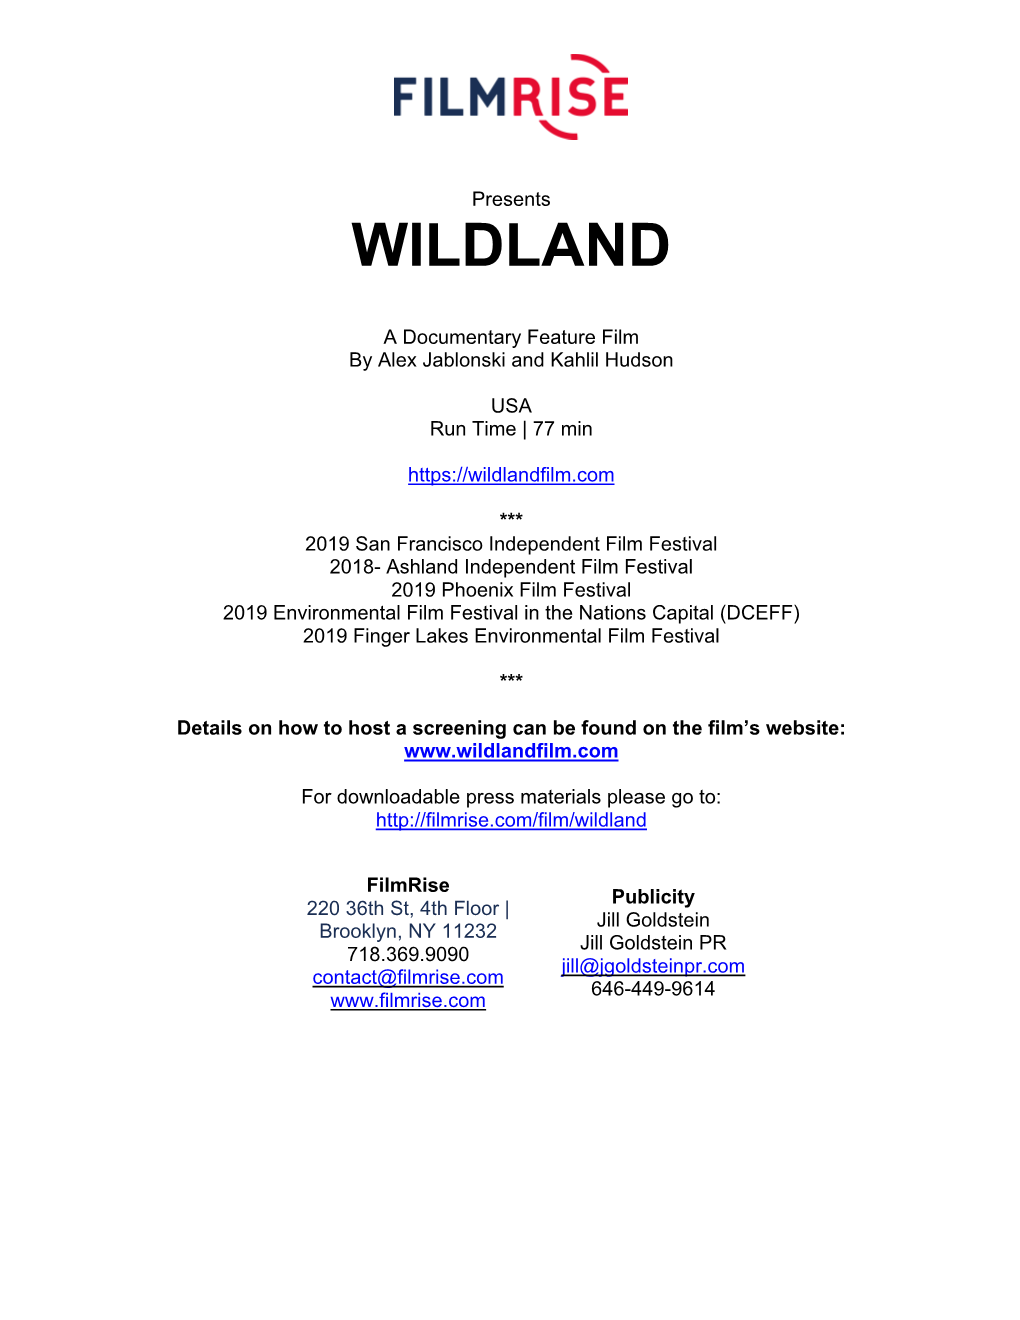 WILDLAND-Press Revision